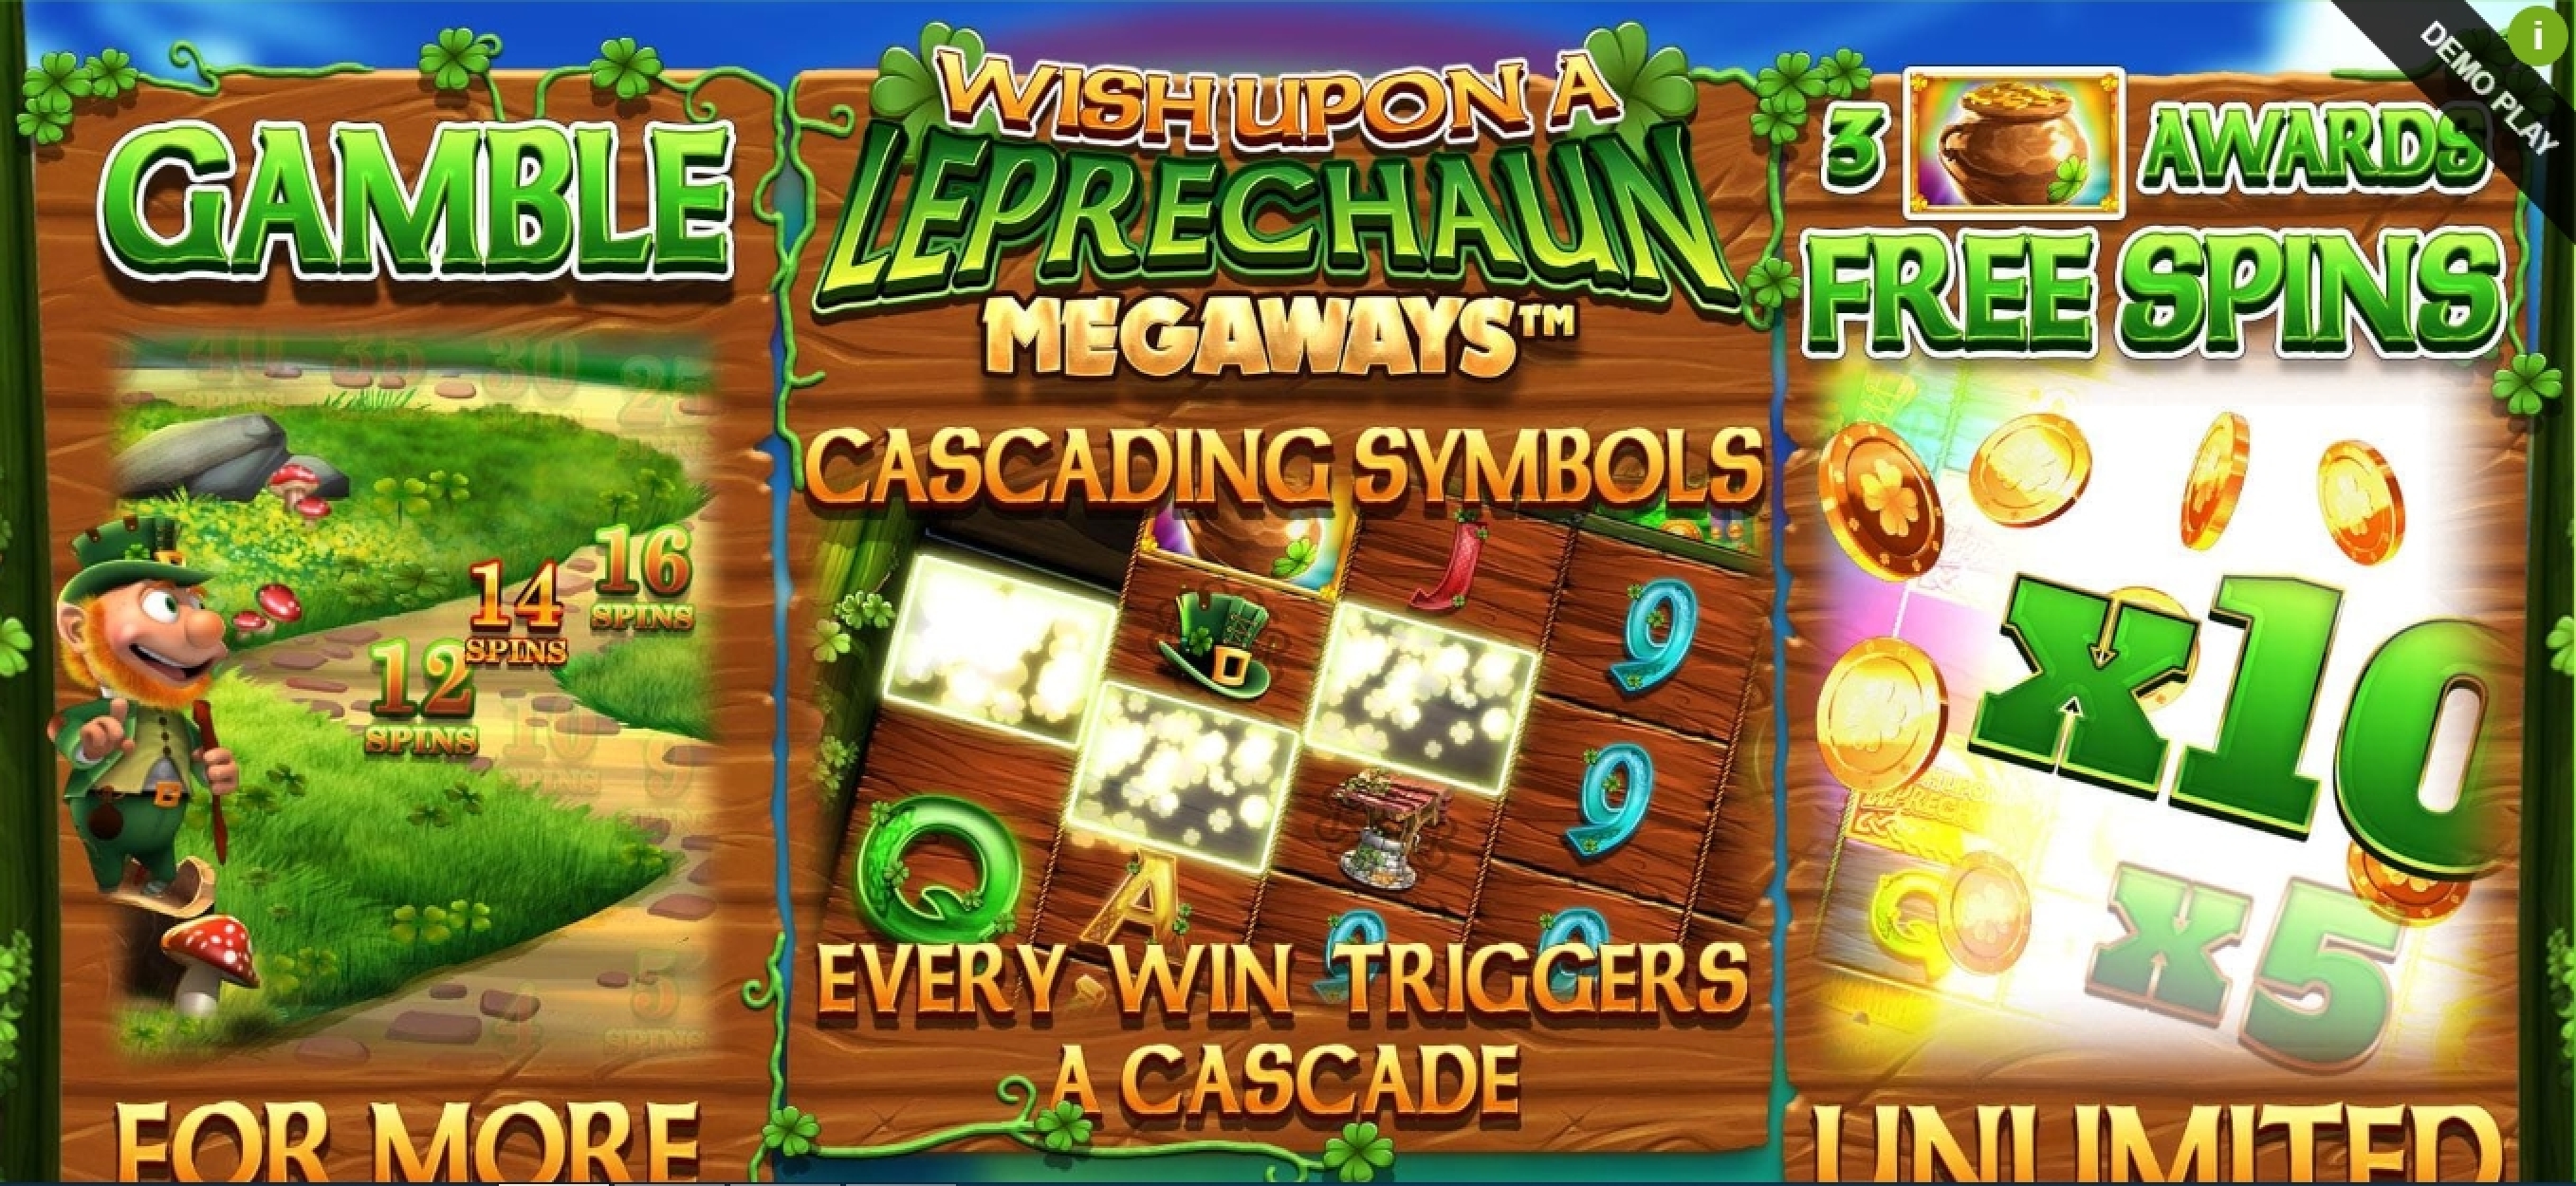 Play Wish Upon A Leprechaun Megaways Free Casino Slot Game by Blueprint Gaming